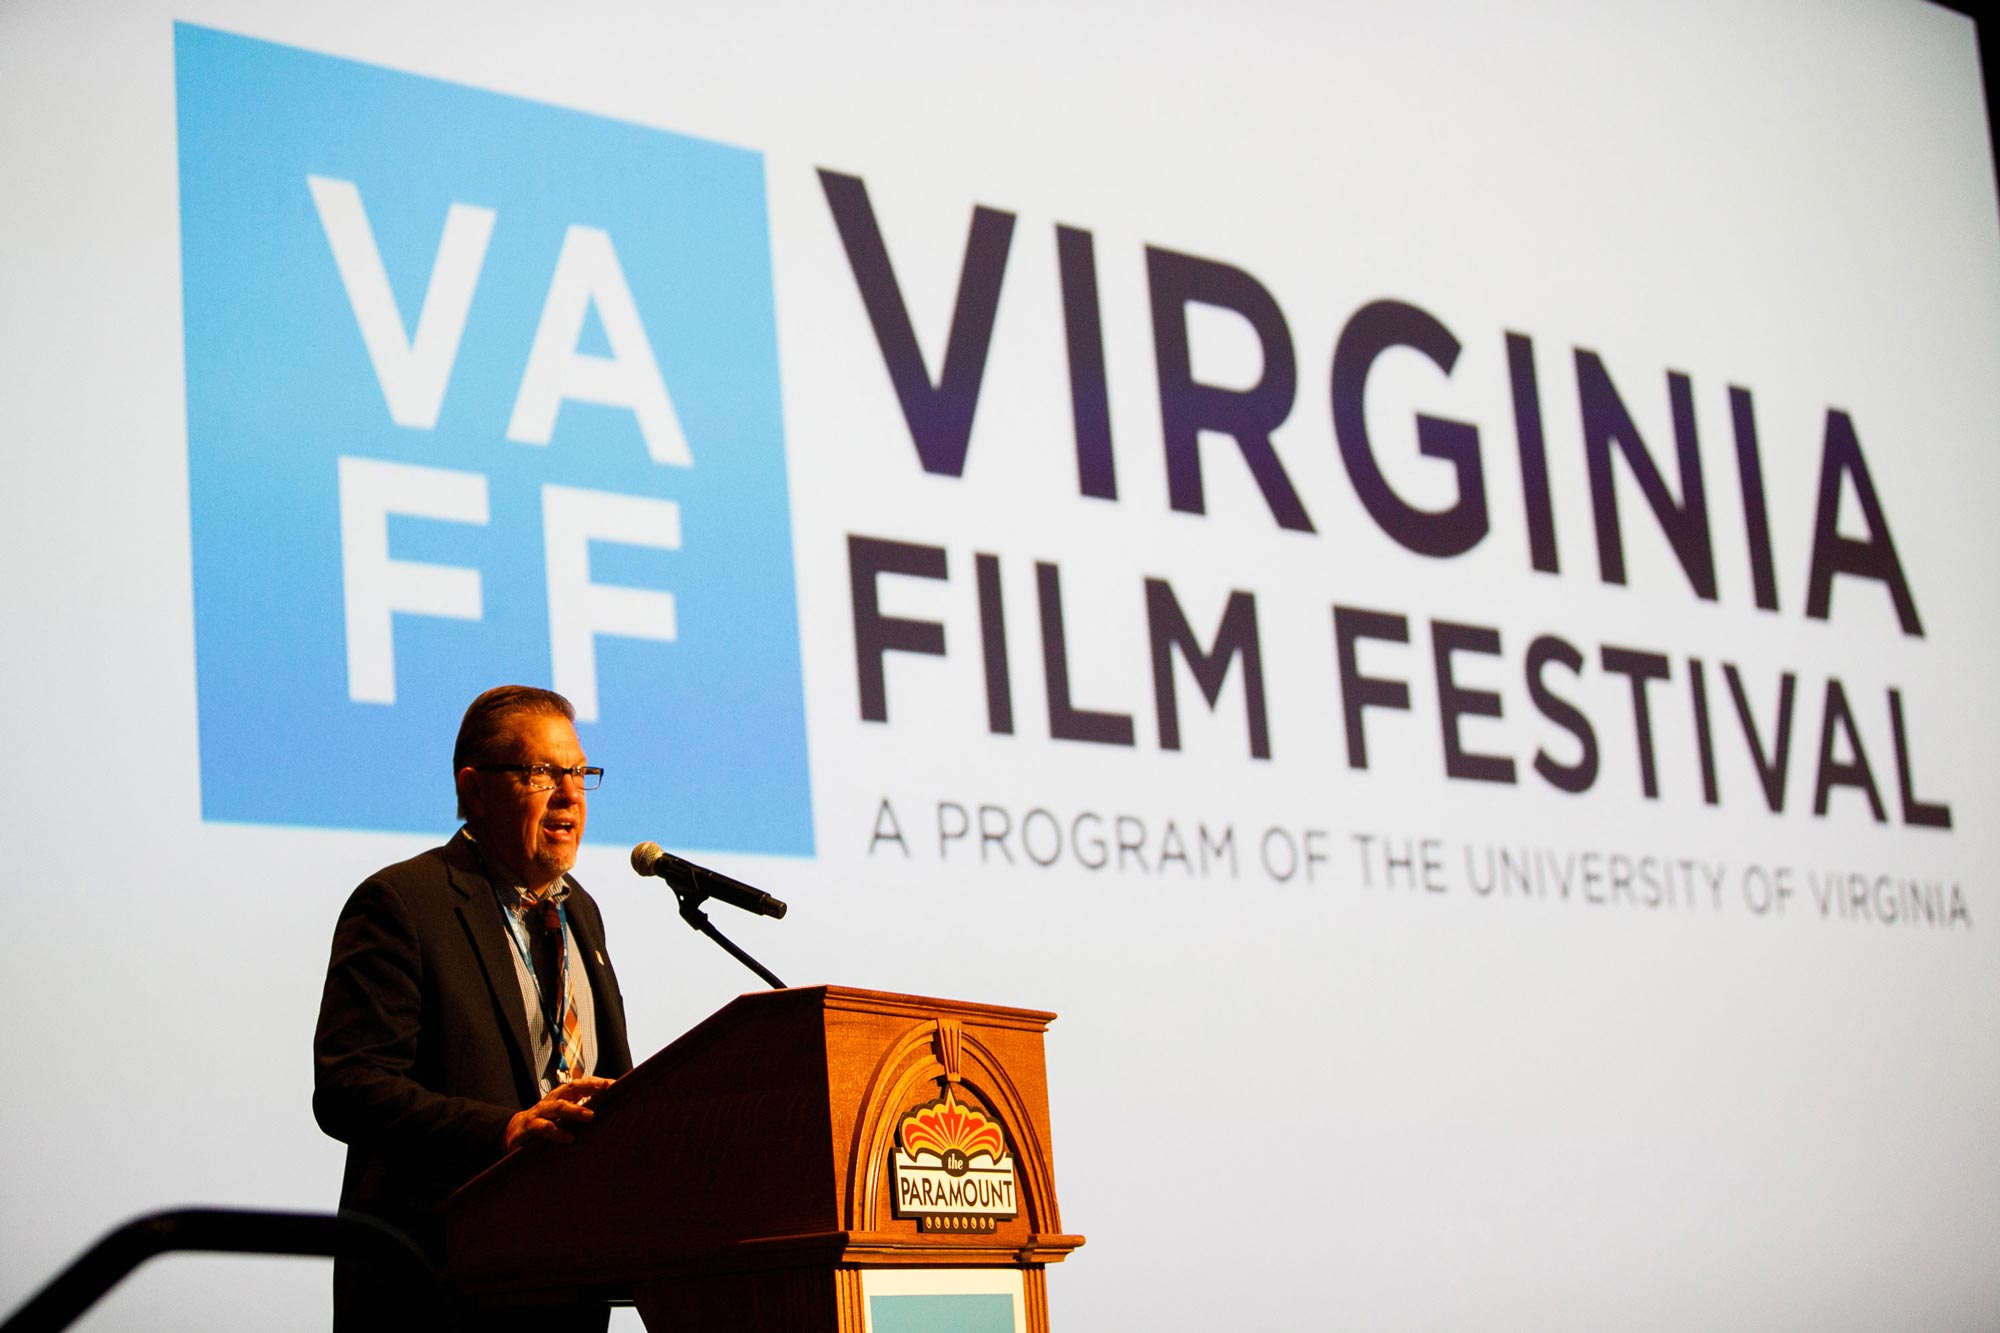 Jody Kielbasa speaking at a podium at the Virginia Film Festival